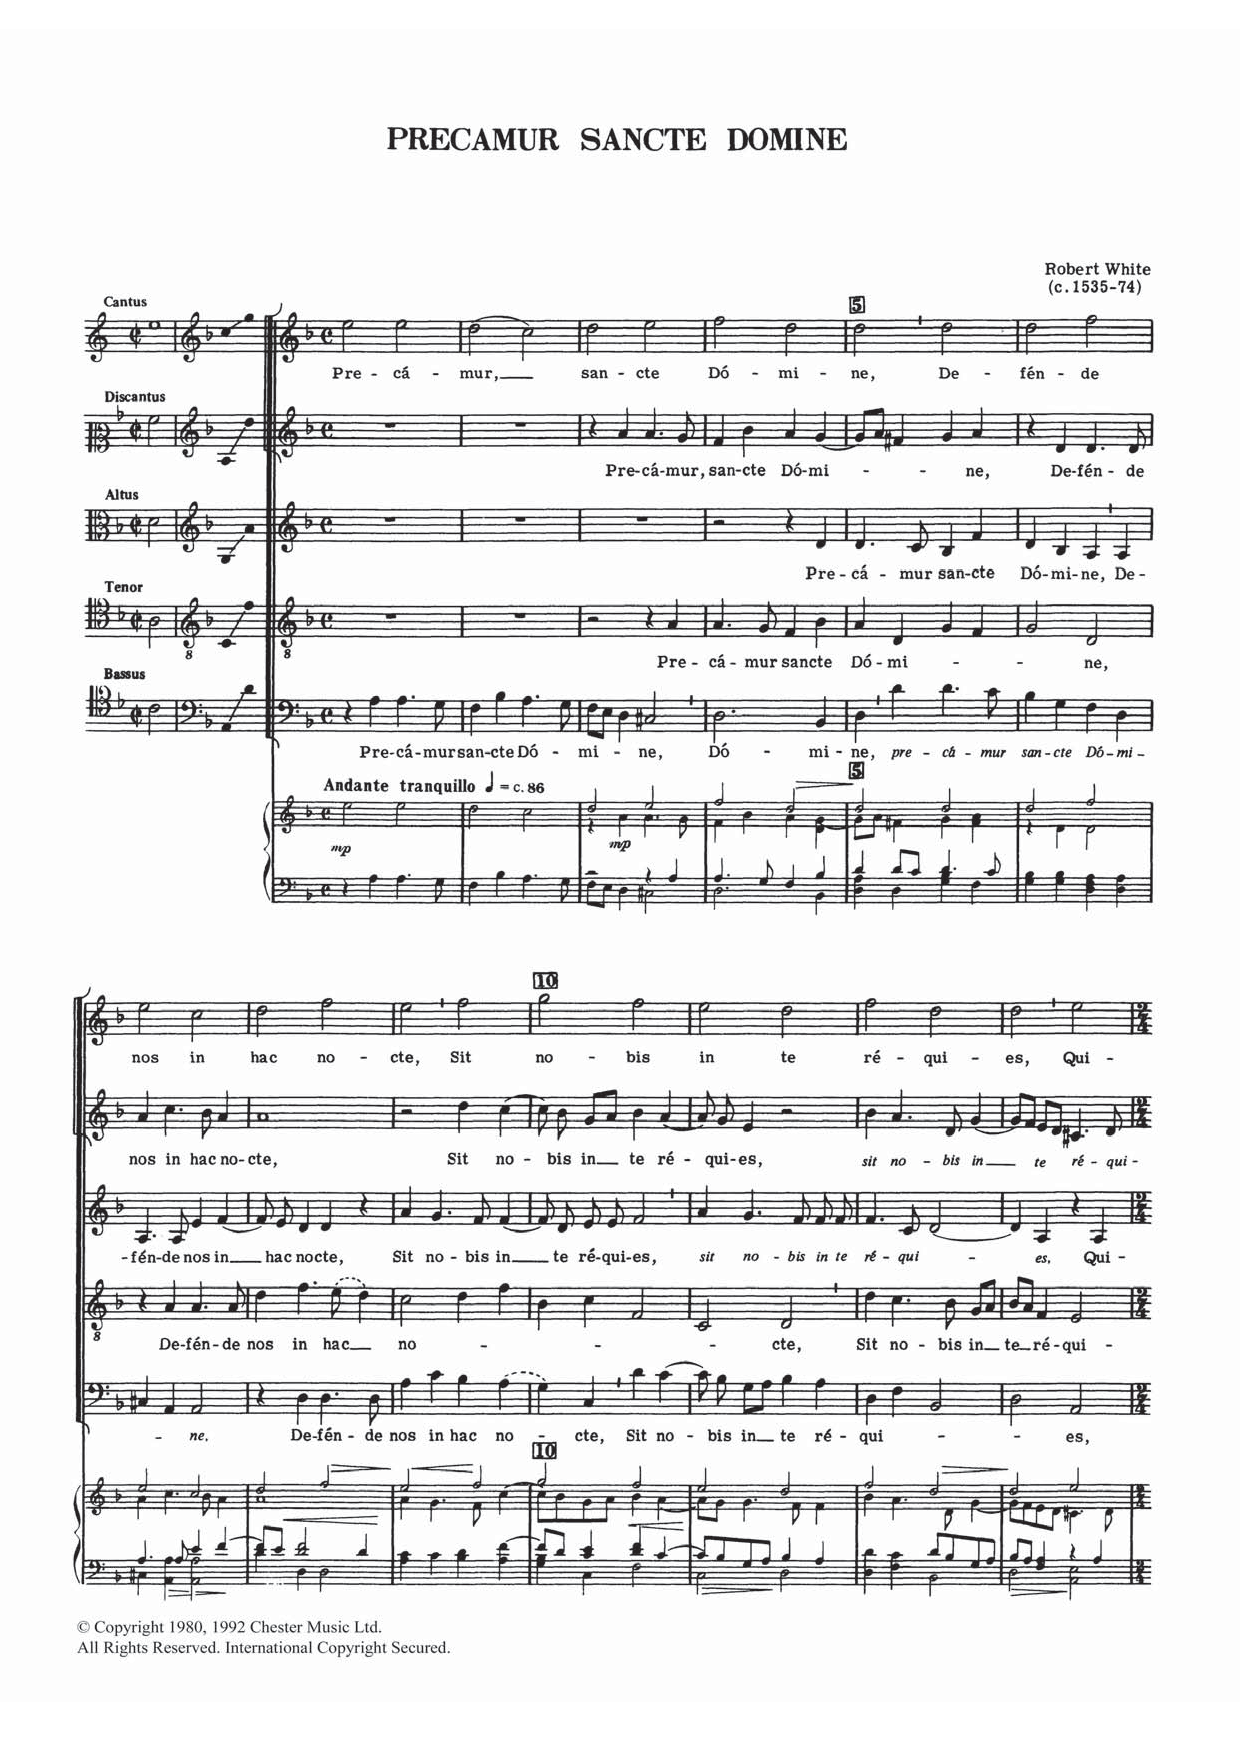 Robert White Precamur Sancte Domine Sheet Music Notes & Chords for Choral SAATB - Download or Print PDF